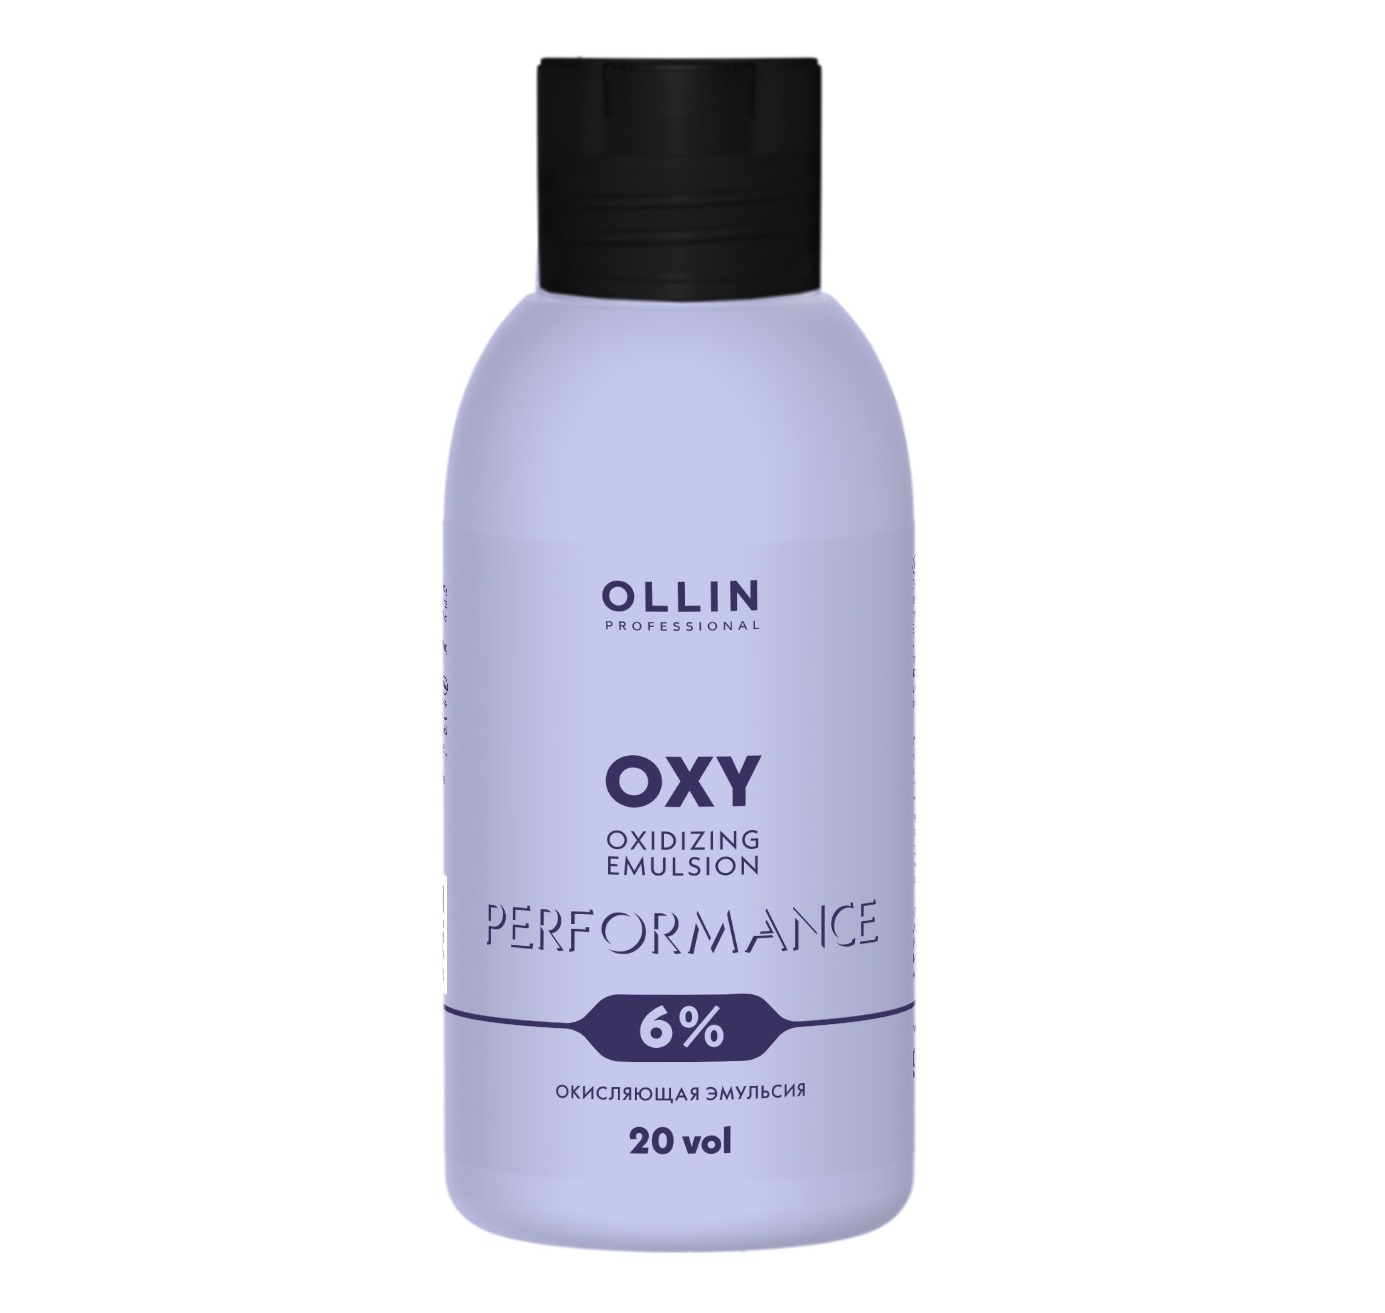 Ollin Professional Окисляющая эмульсия 6% 20 vol, 90 мл (Ollin Professional, Performance)